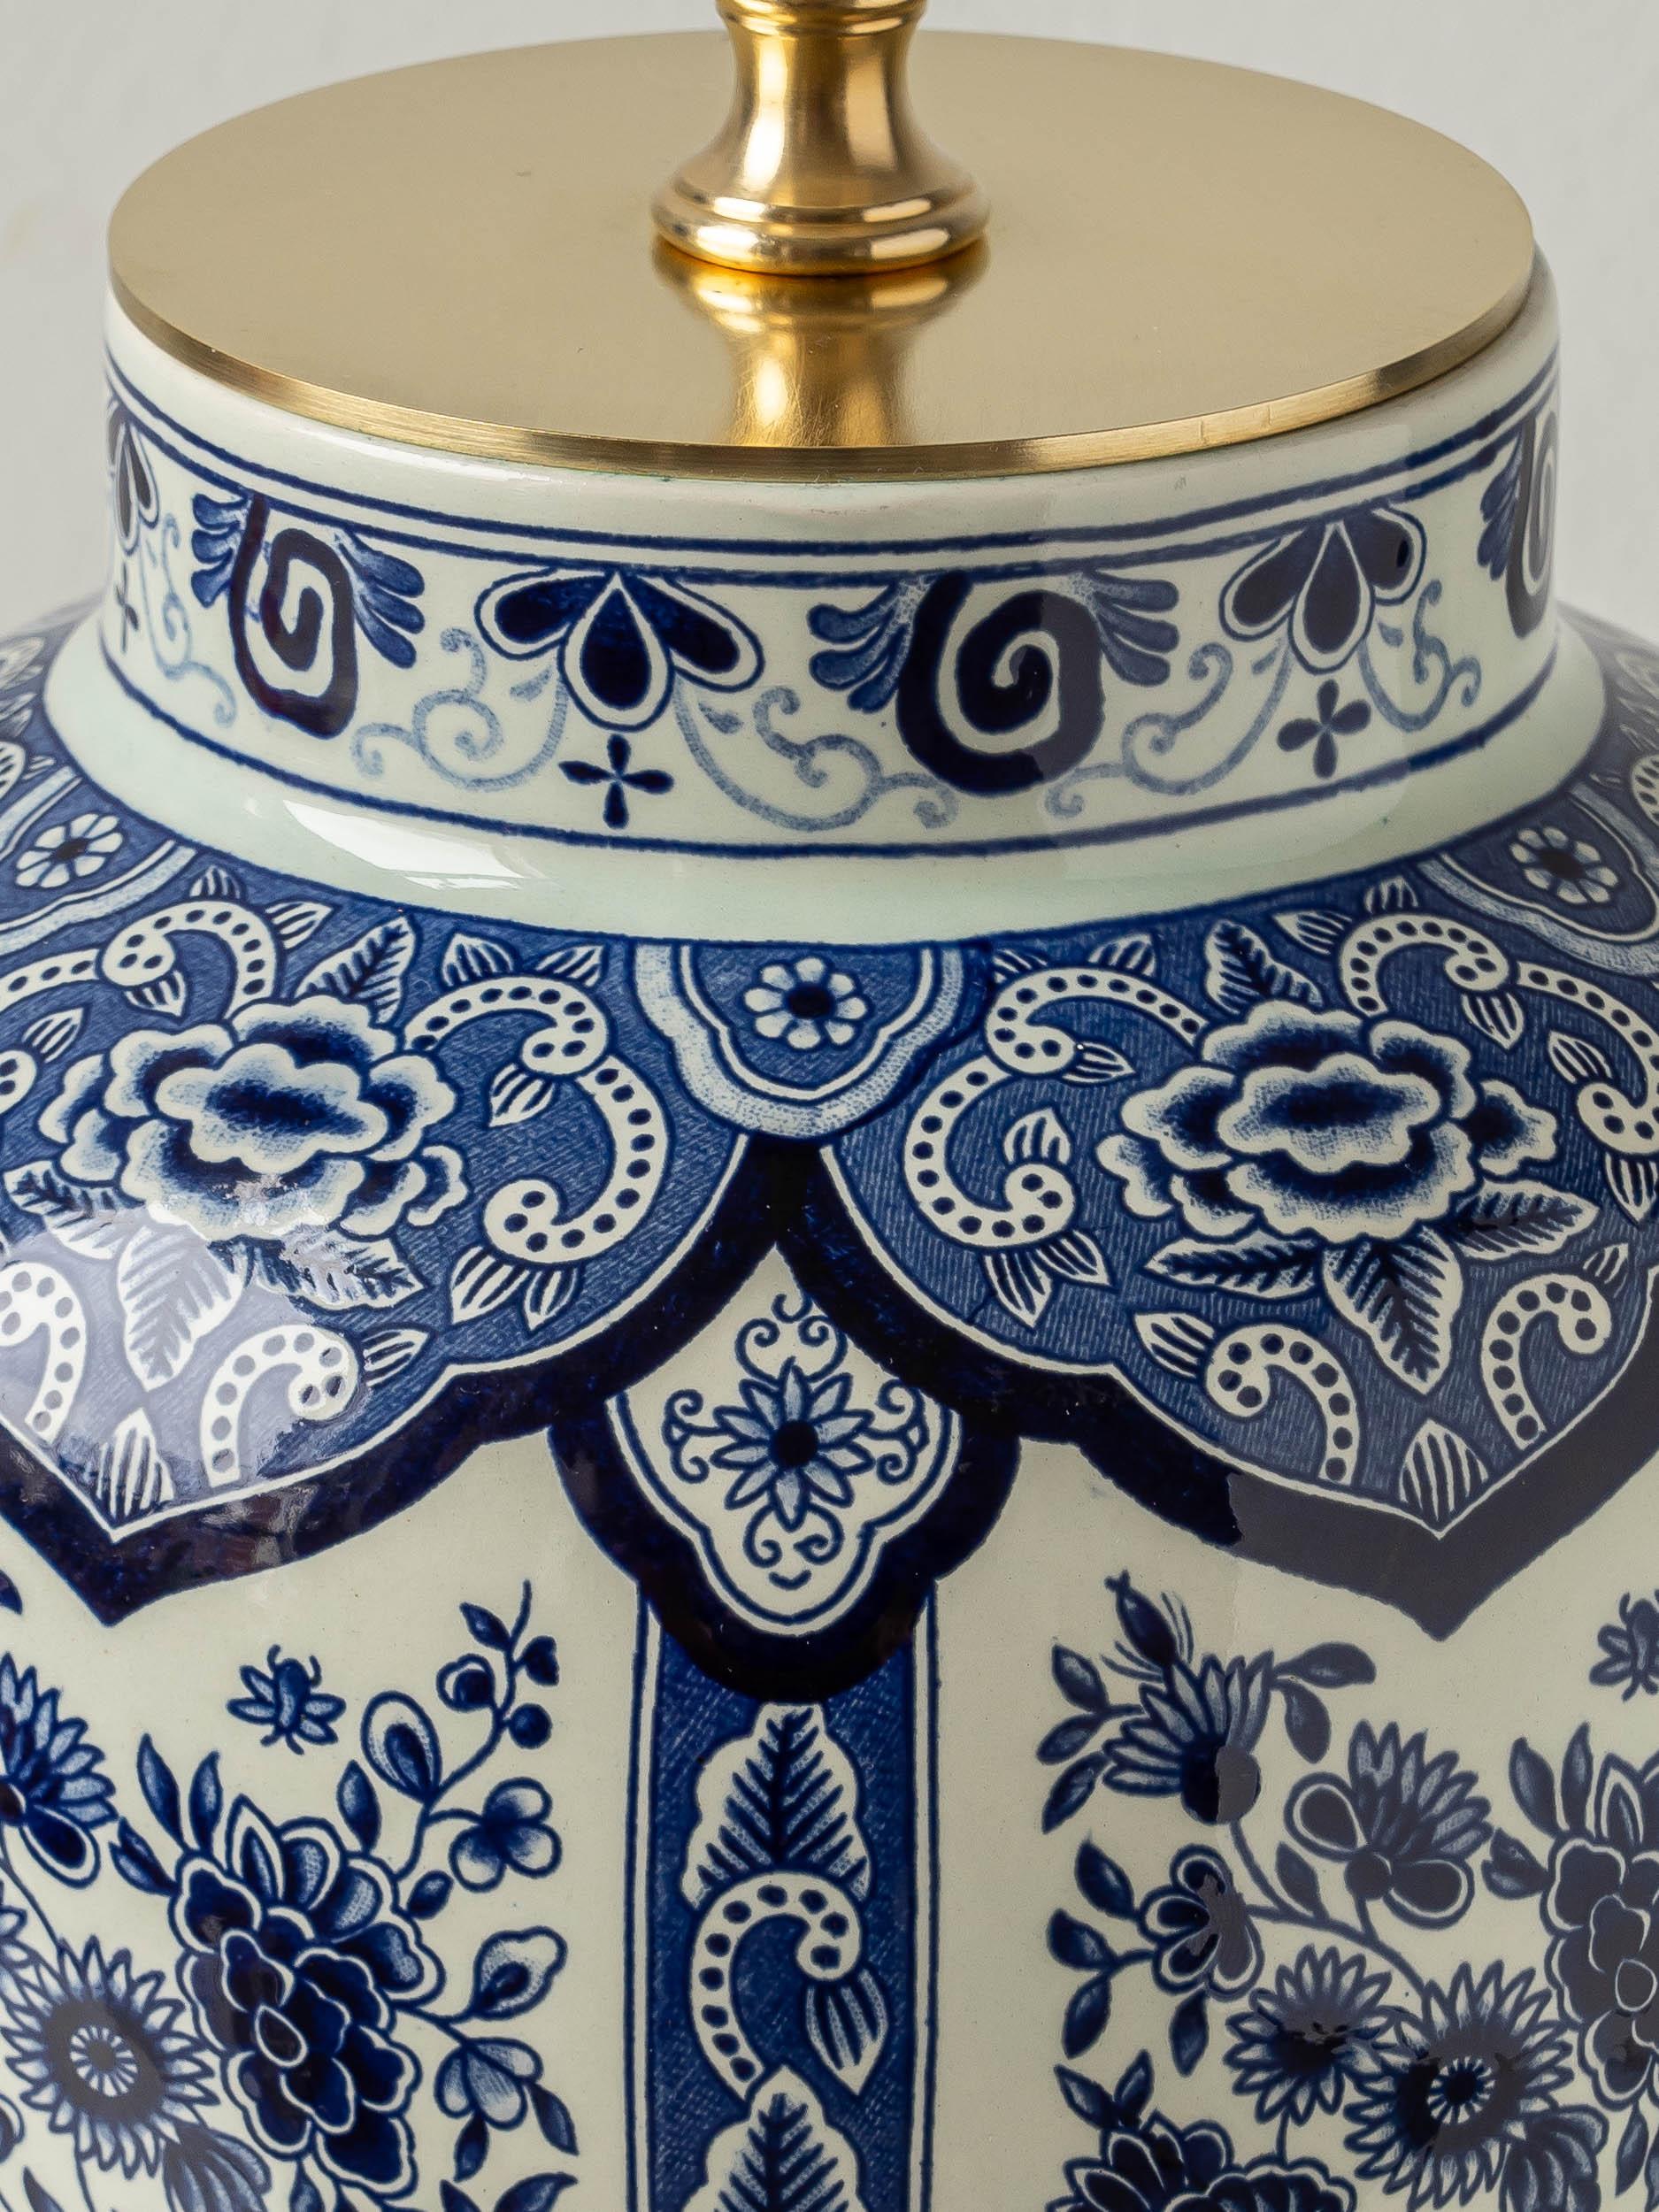 Dutch Delft Blue Ceramic Table Lamps from Vintage Boch Frères Keramis For Sale